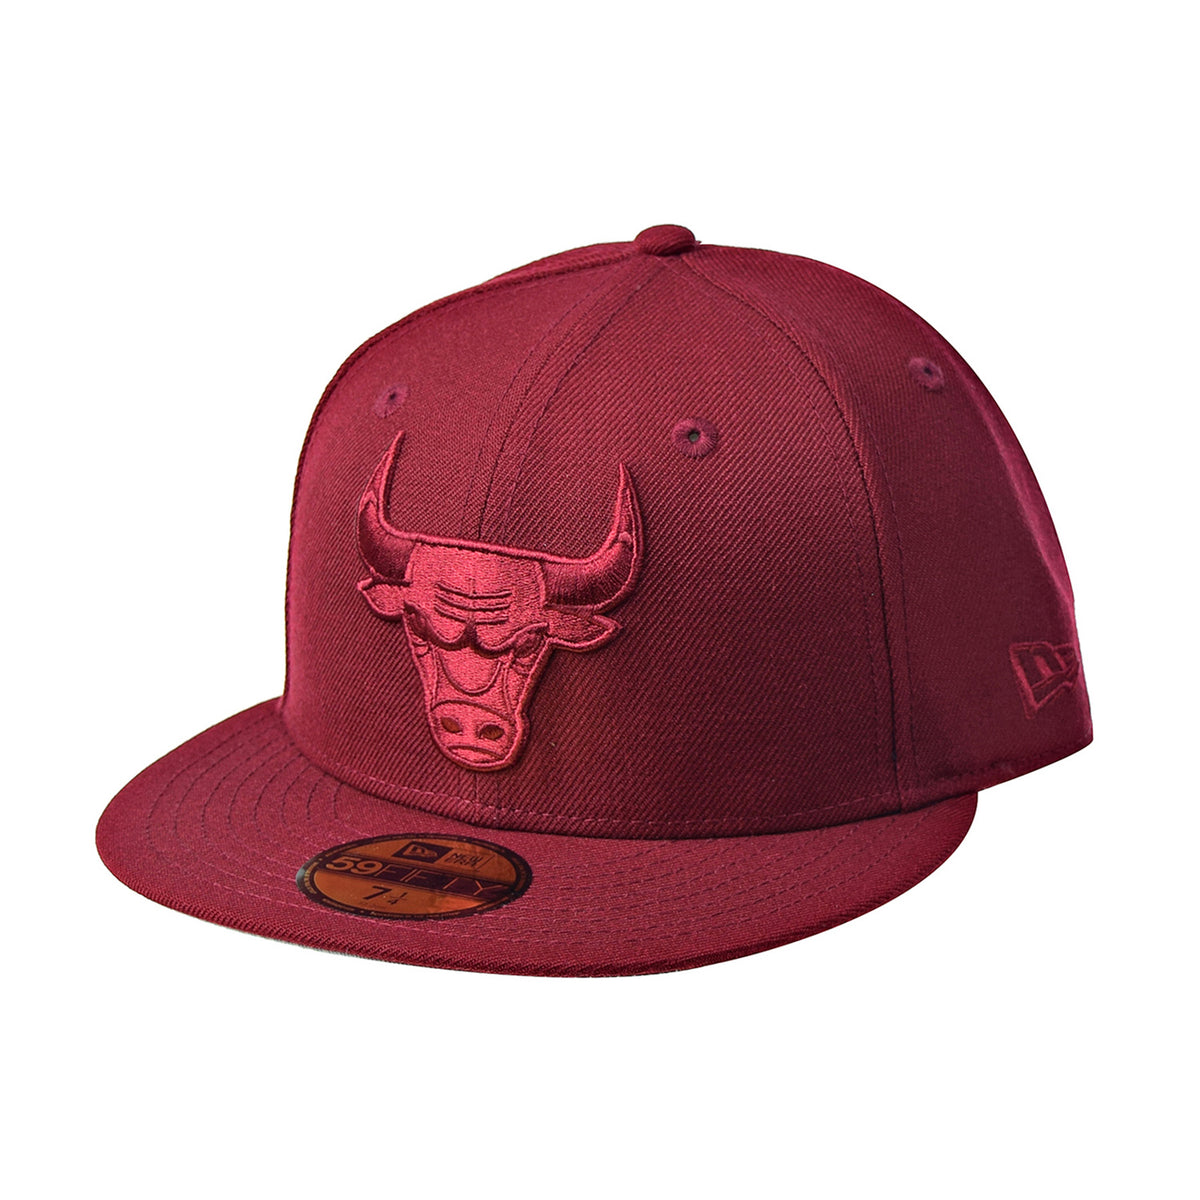 New Era Chicago Bulls 59FIFTY Fitted Men's Hat Burgundy Burgundy / 7 1/8